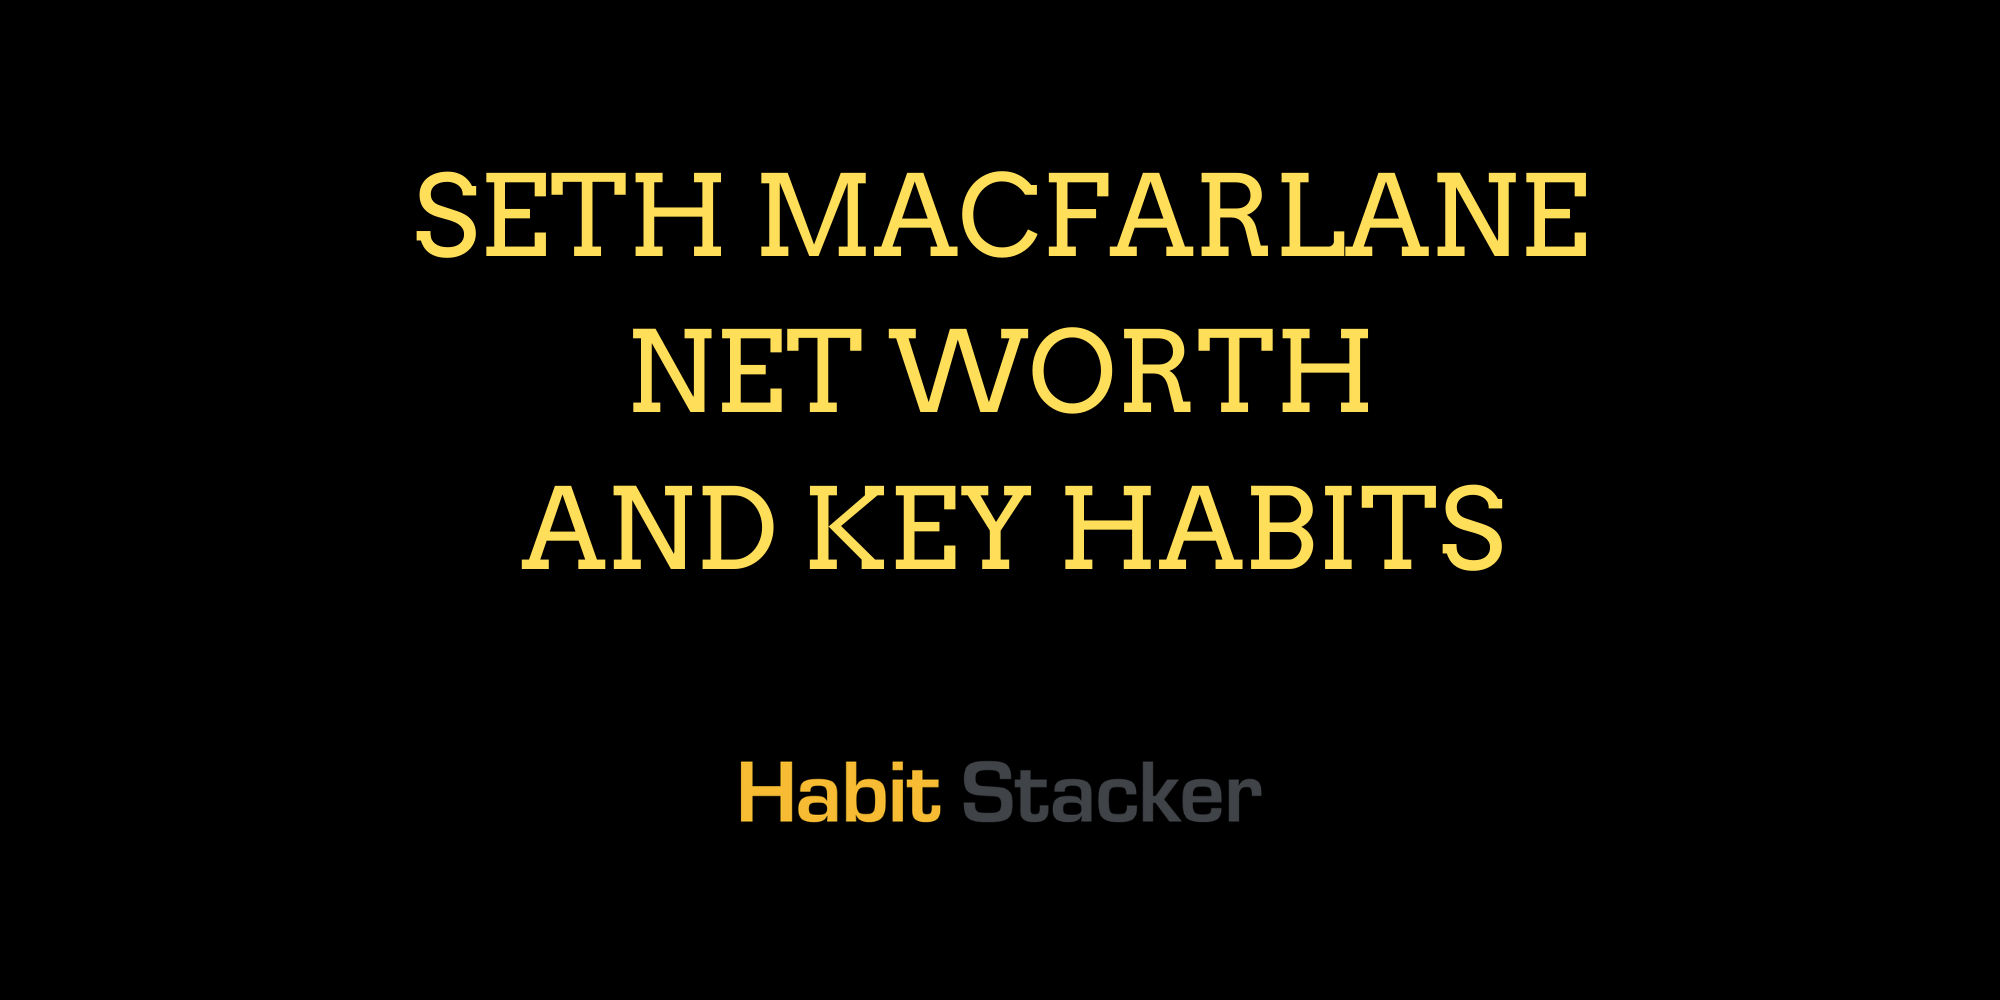 Seth Macfarlane Net Worth and Key Habits